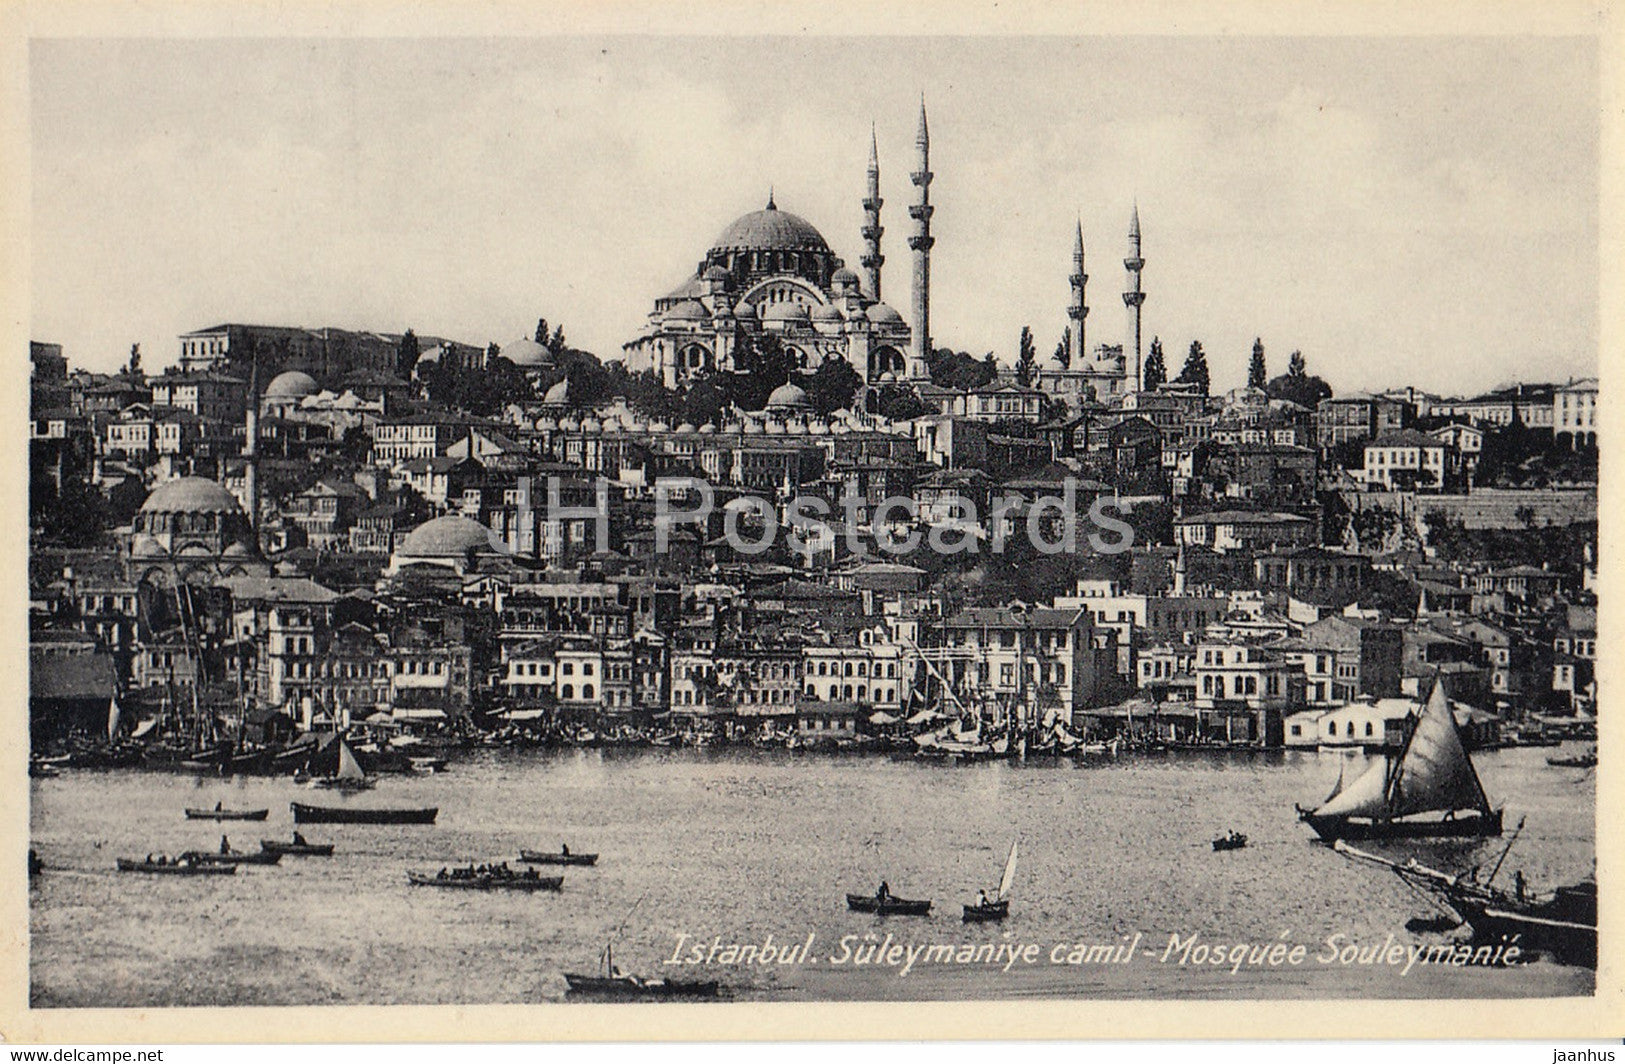 Istanbul - Mosquee Souleymanie - old postcard - Turkey - unused - JH Postcards